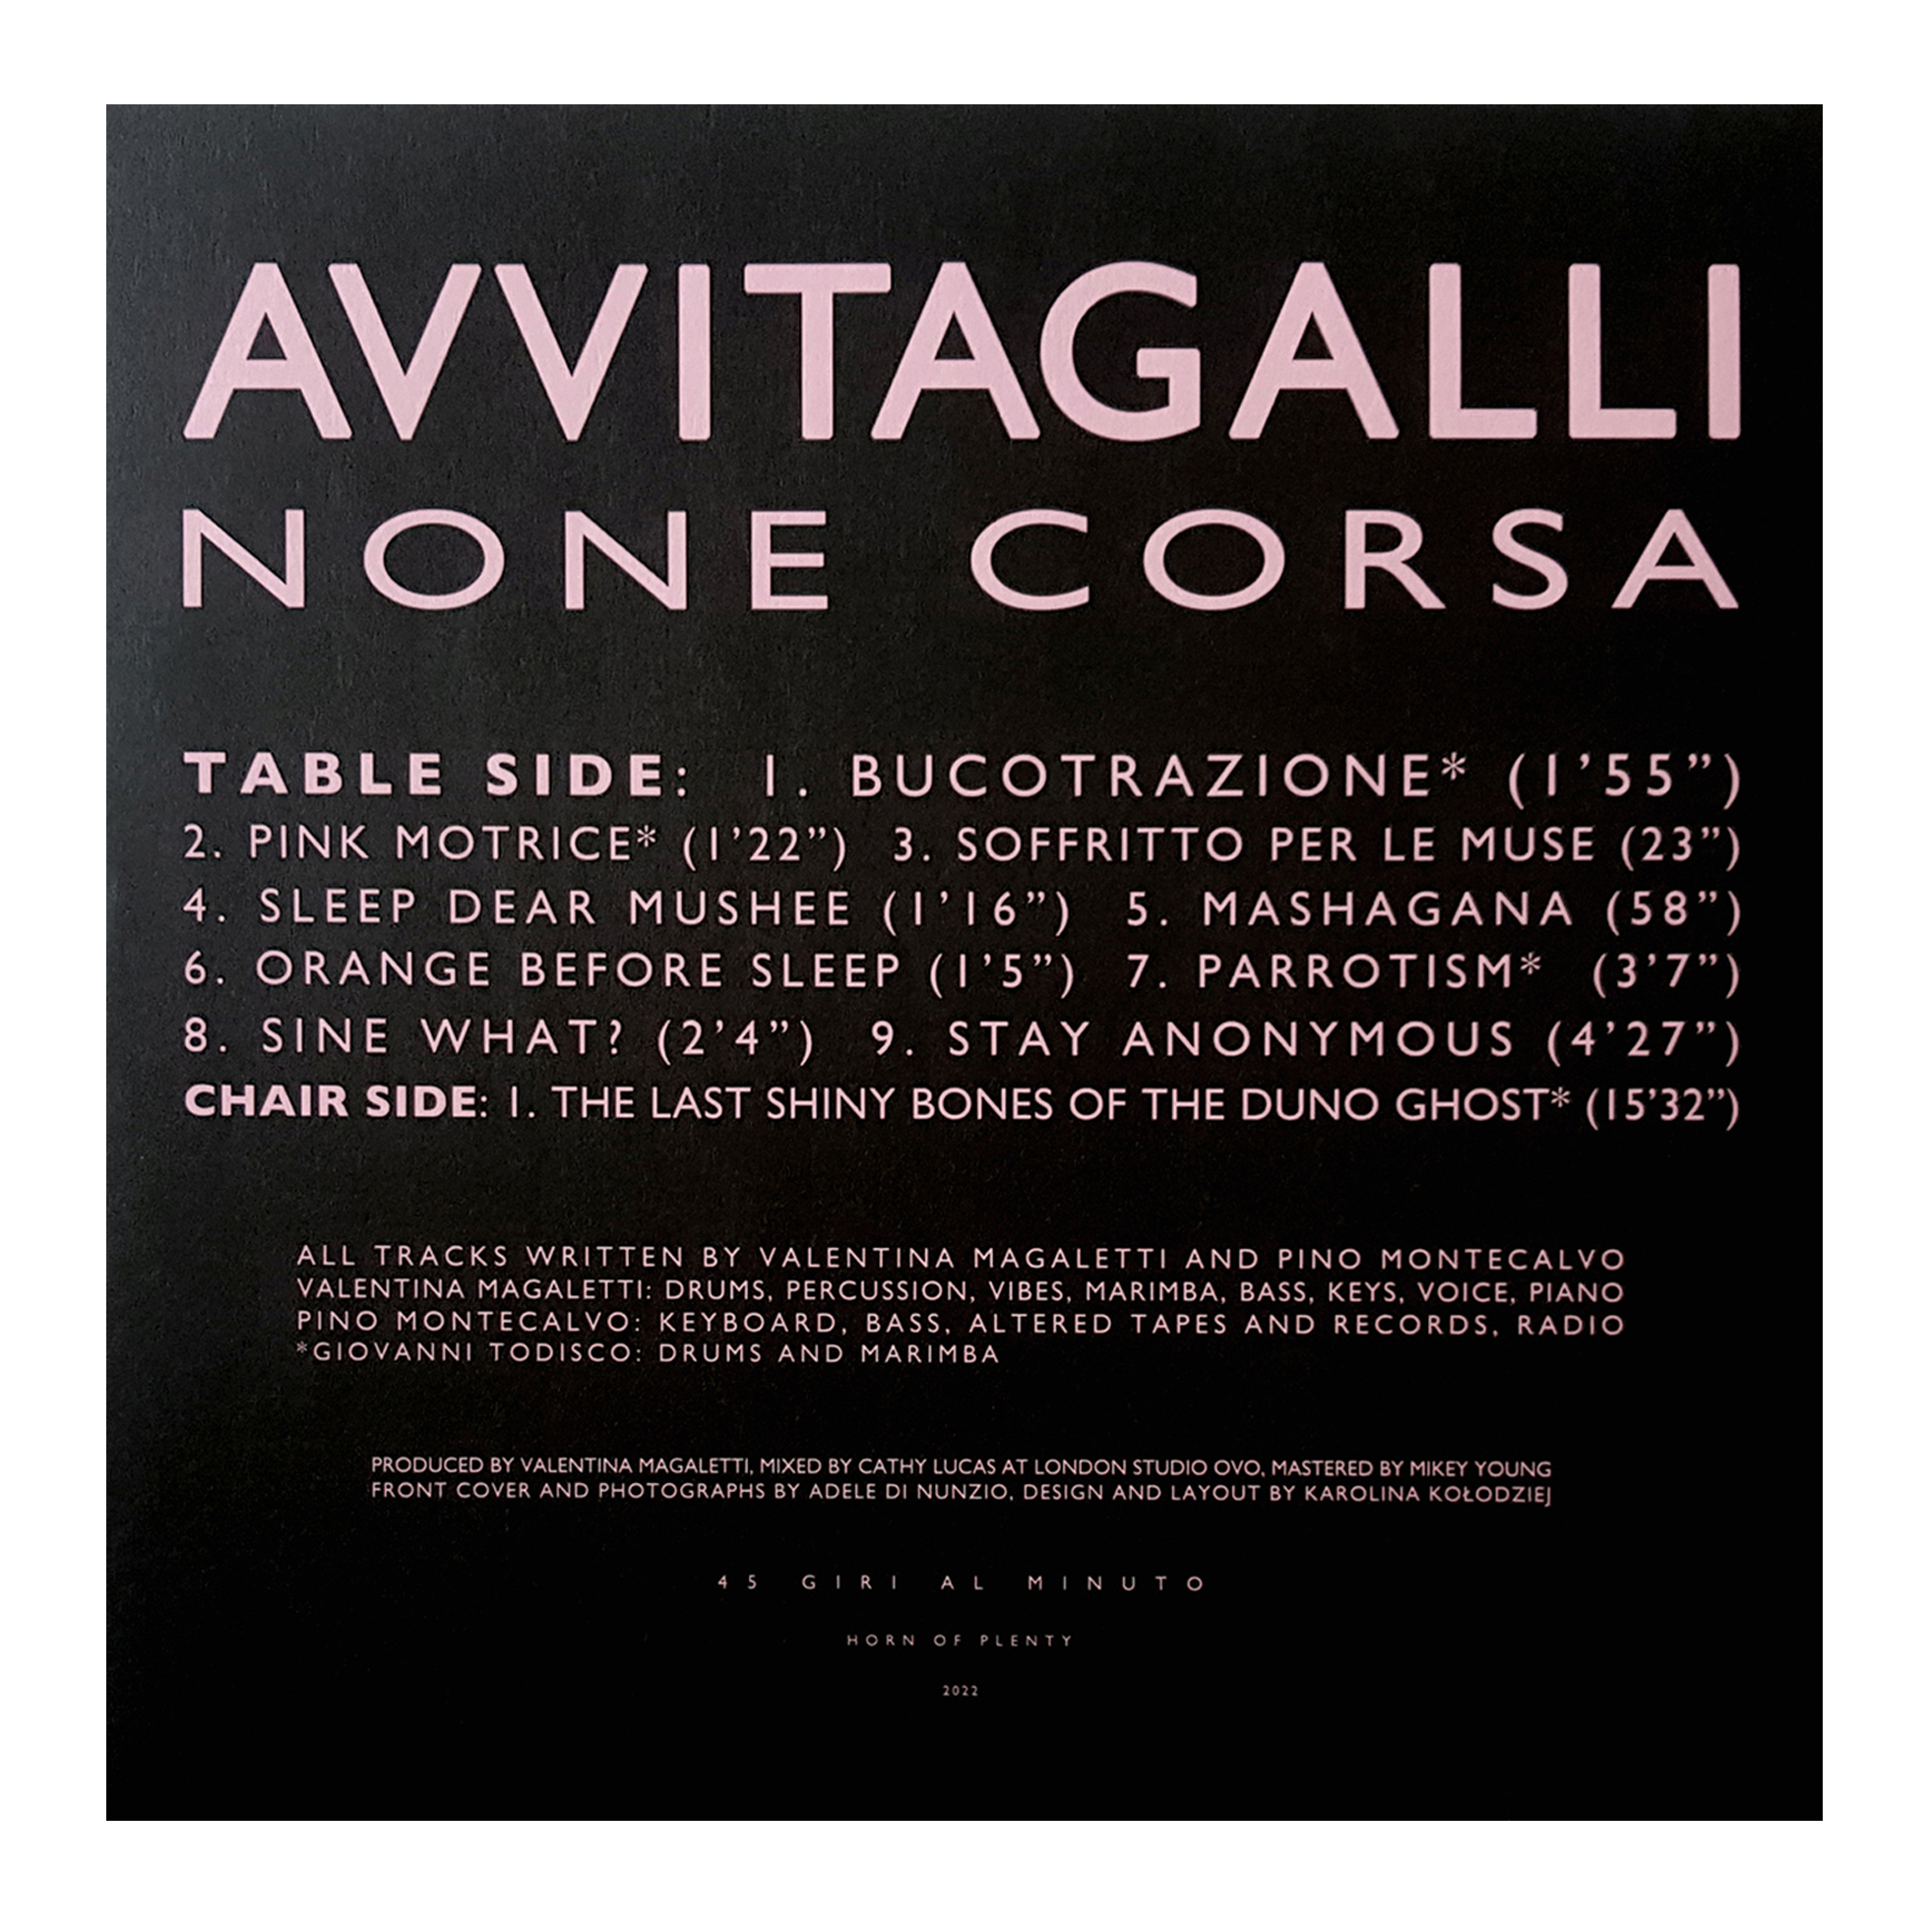 Avvitagalli - None Corsa (Horn of Plenty, 2022). Record cover design by Karolina Kołodziej (Kolography). Feat. Adele di Nunzio photography.